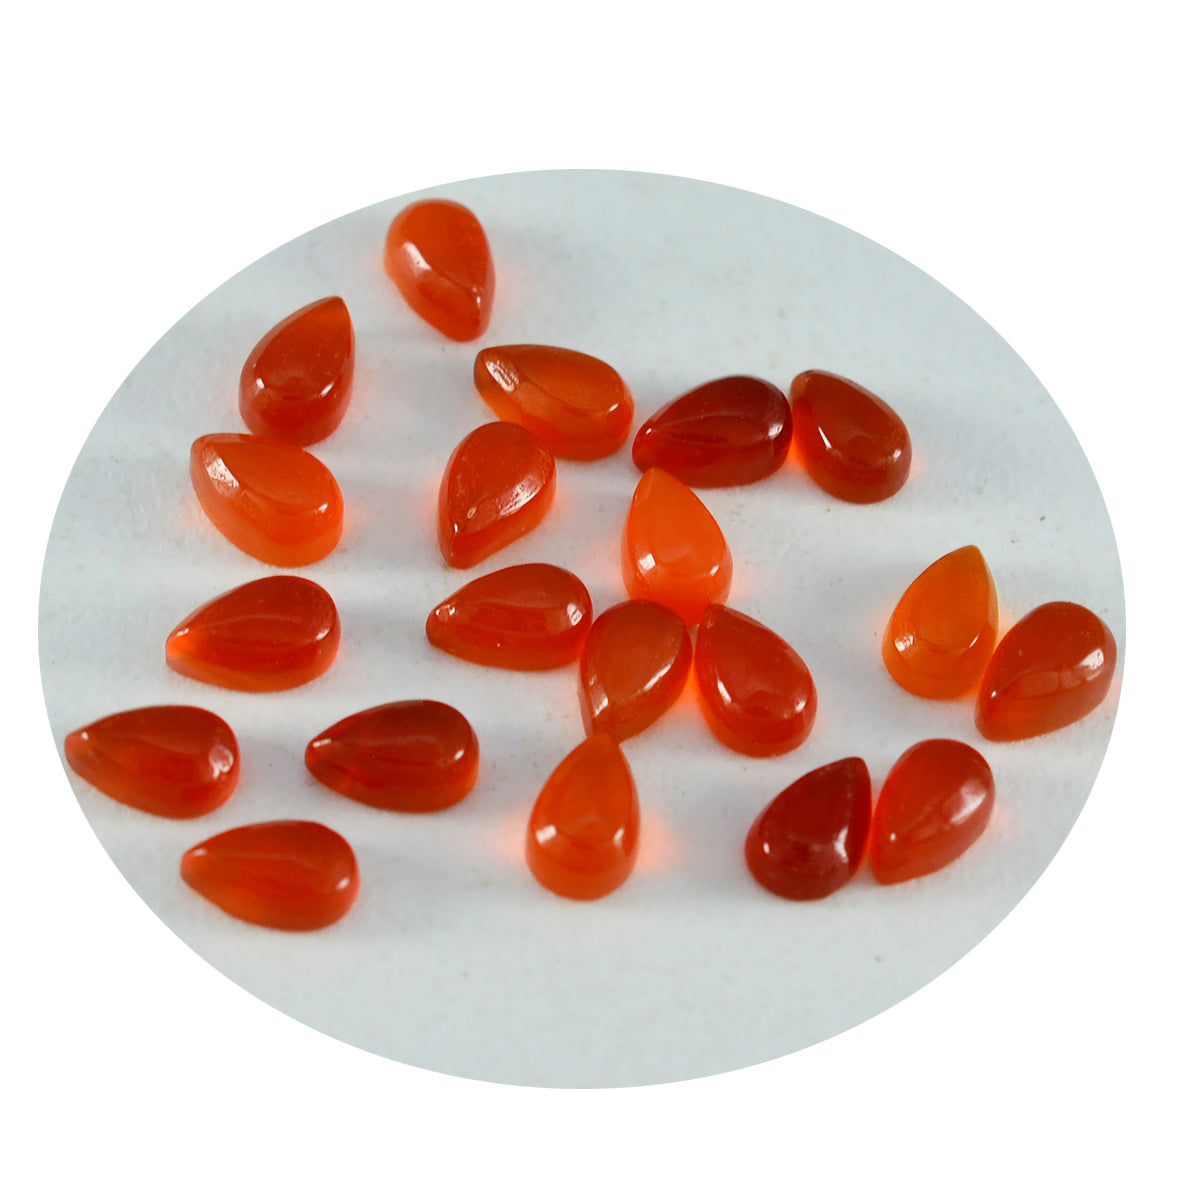 Riyogems 1PC Rode Onyx Cabochon 3x5 mm Peervorm aantrekkelijke kwaliteit losse edelstenen